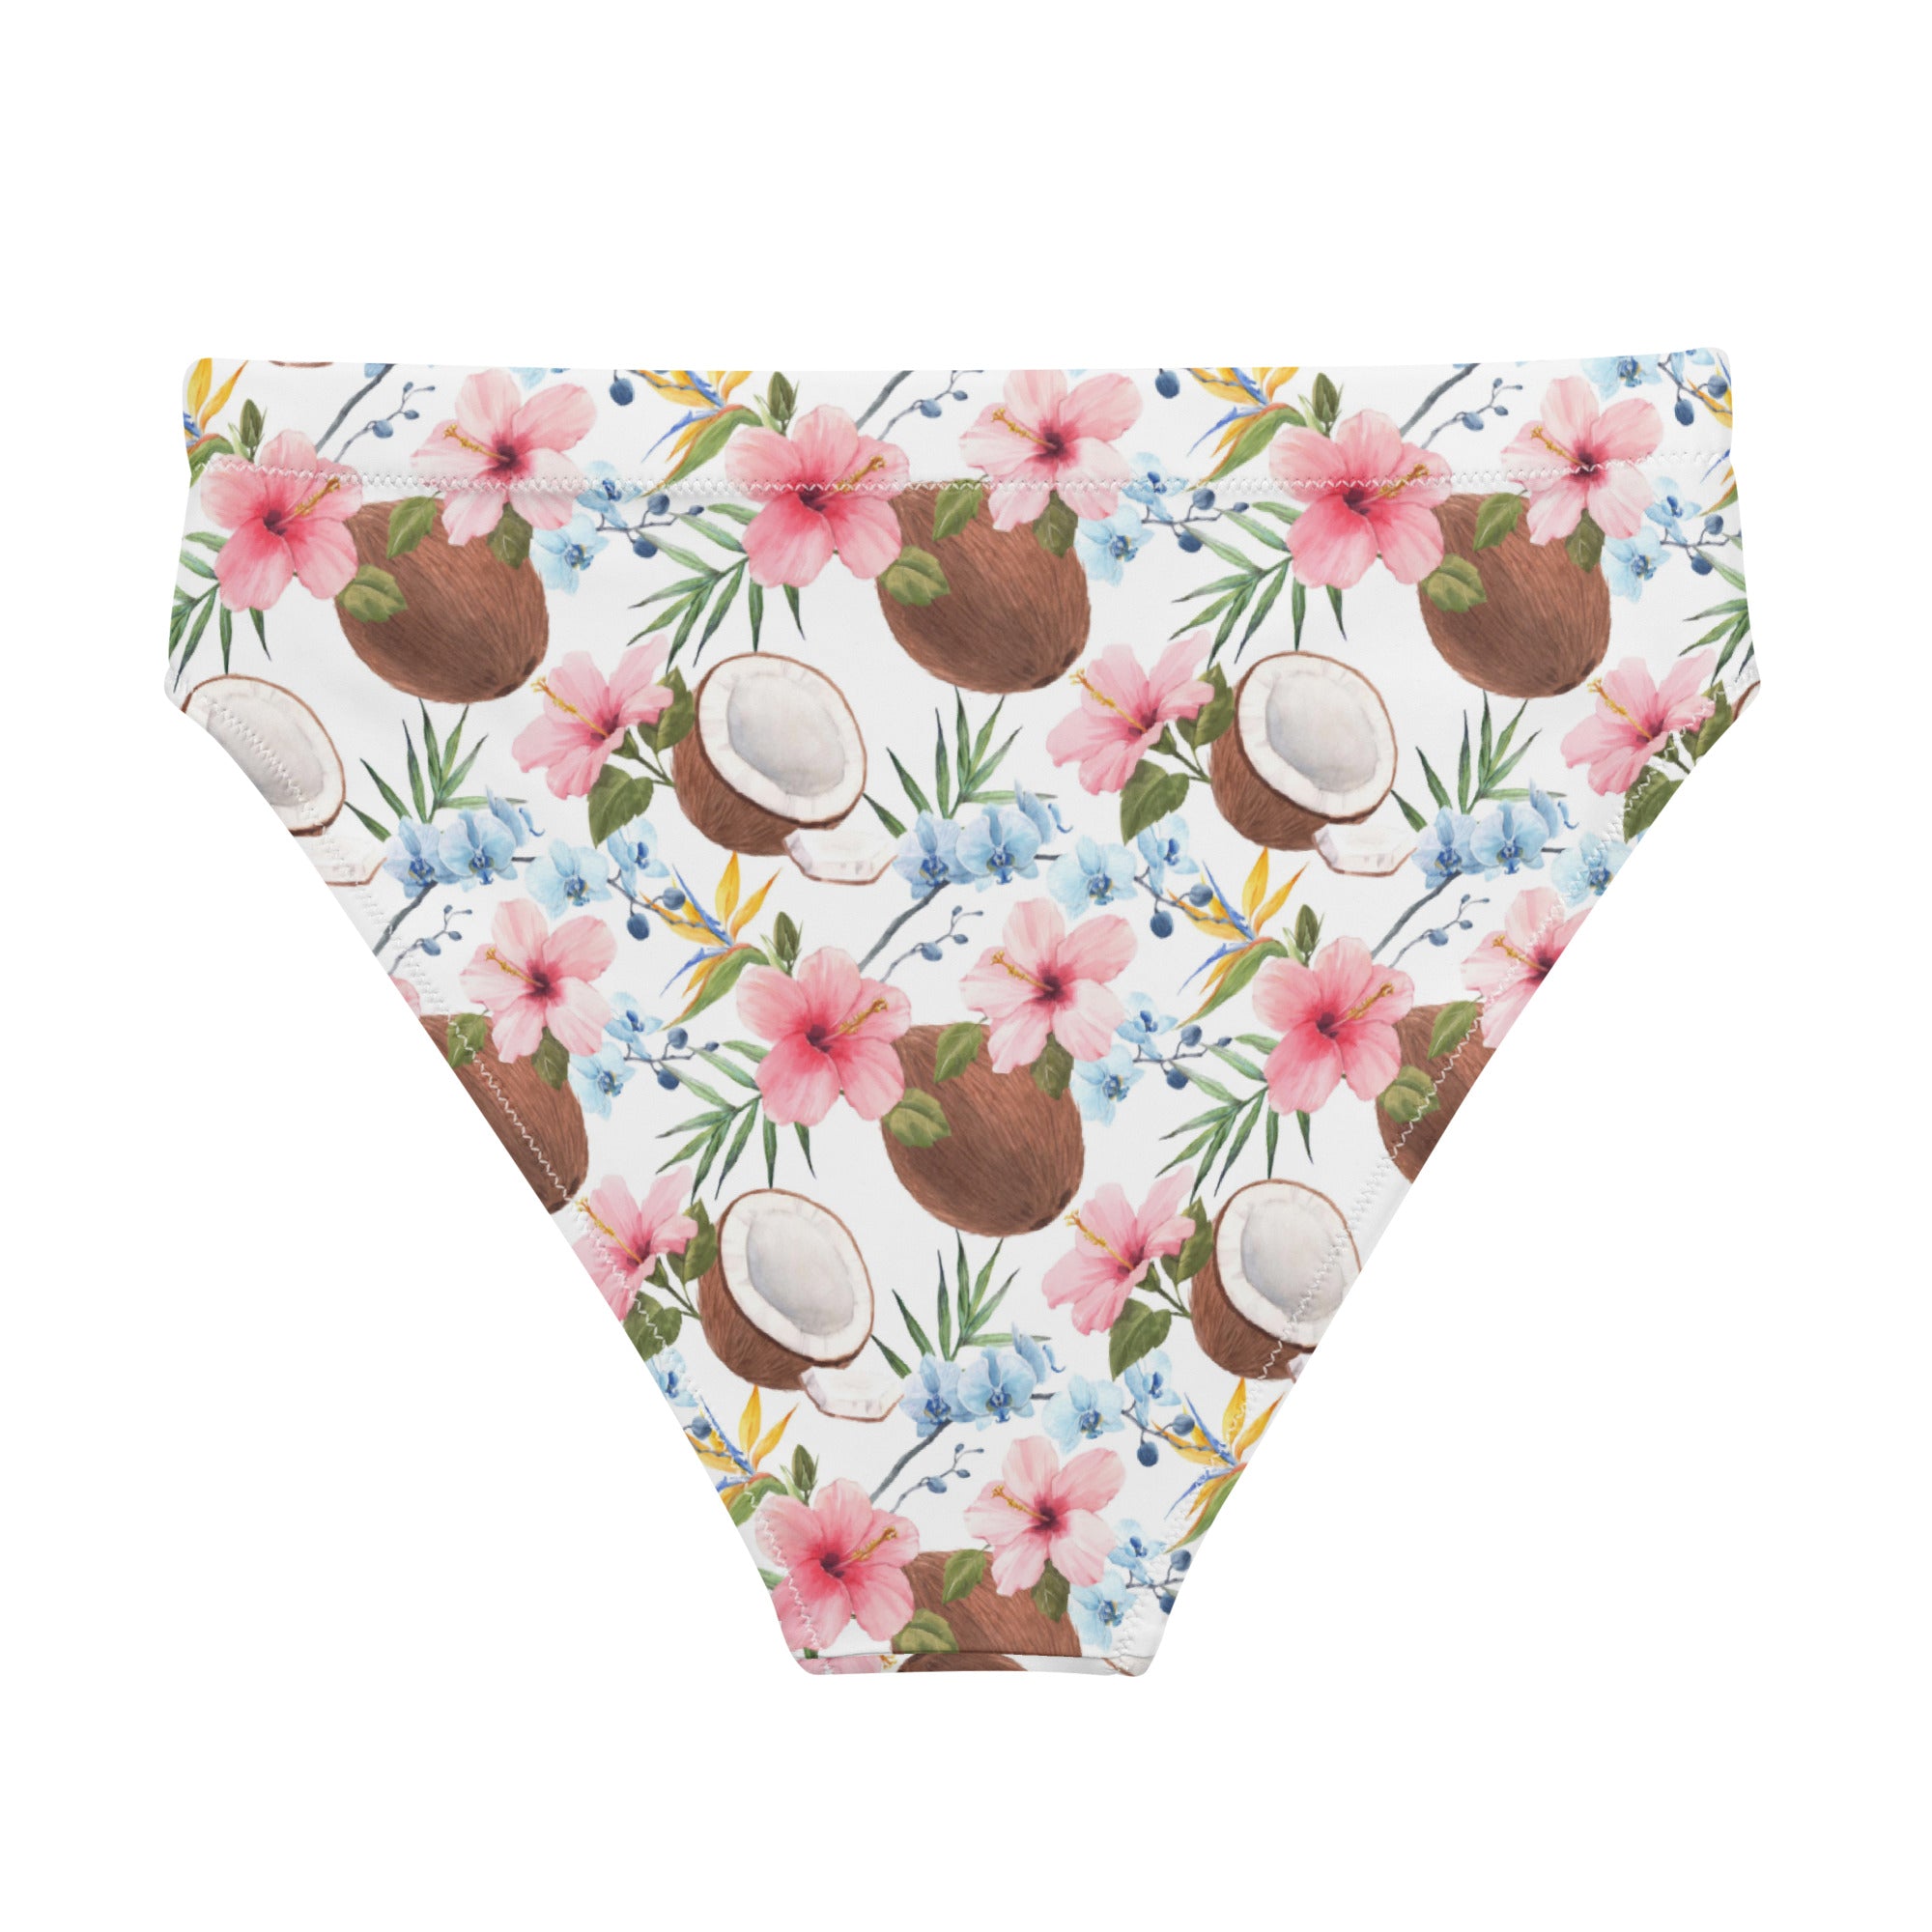 Coconut & floral print bikini bottom for women